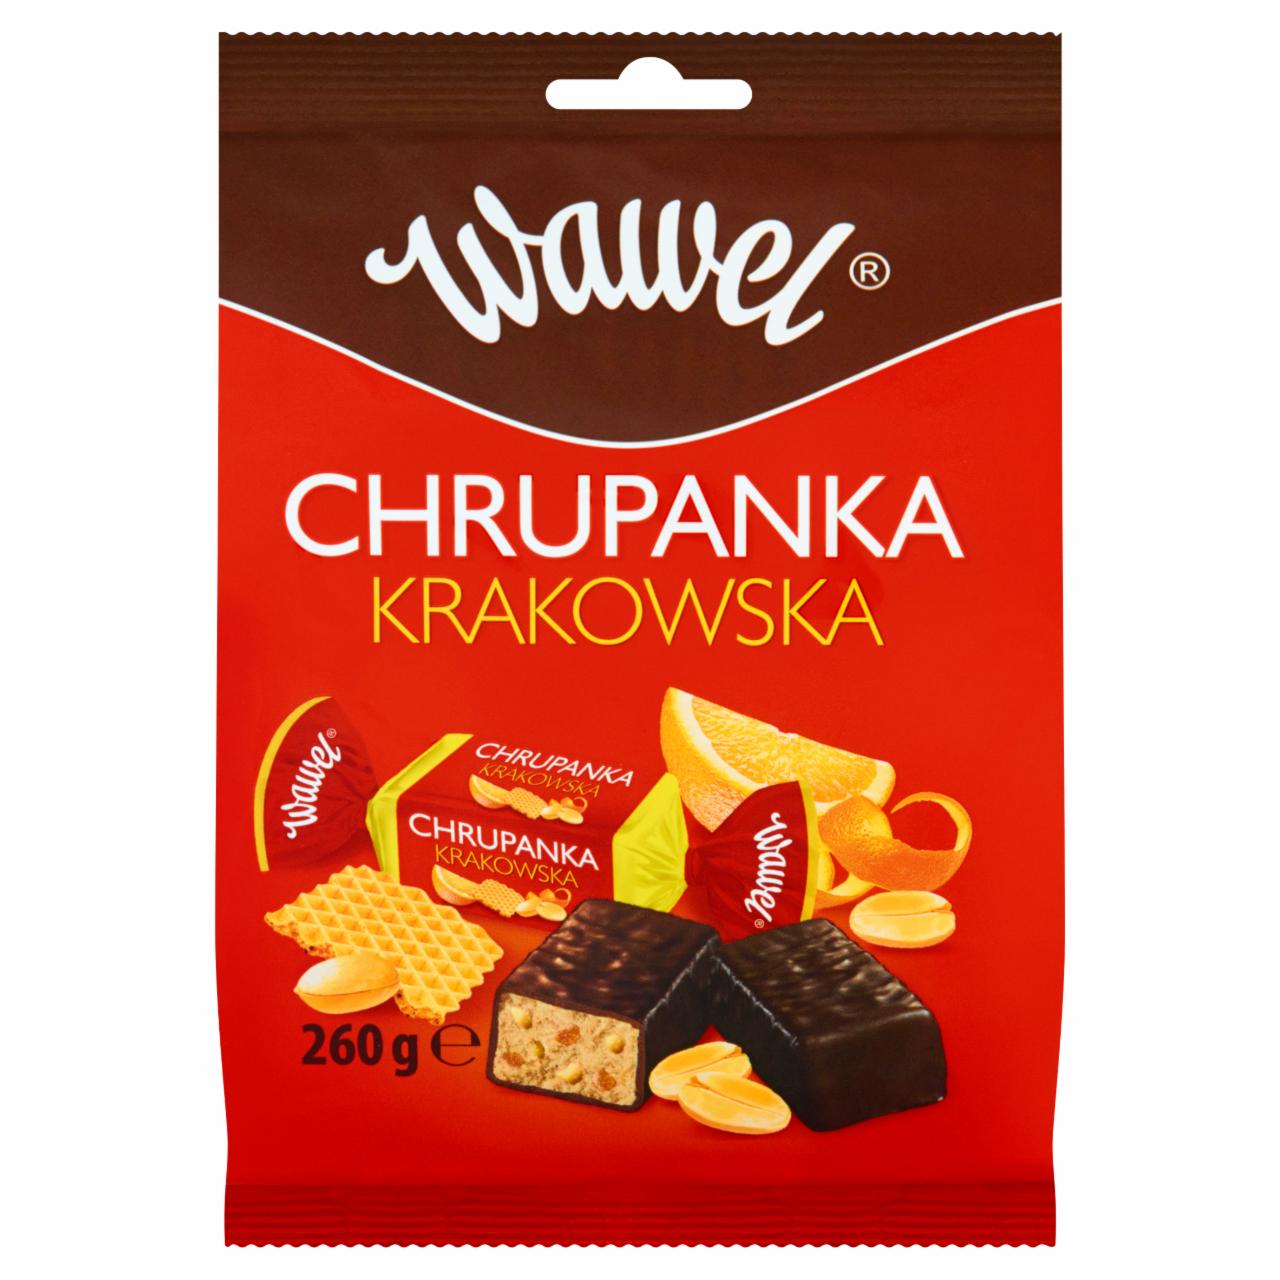 Zdjęcia - Wawel Chrupanka krakowska 260 g